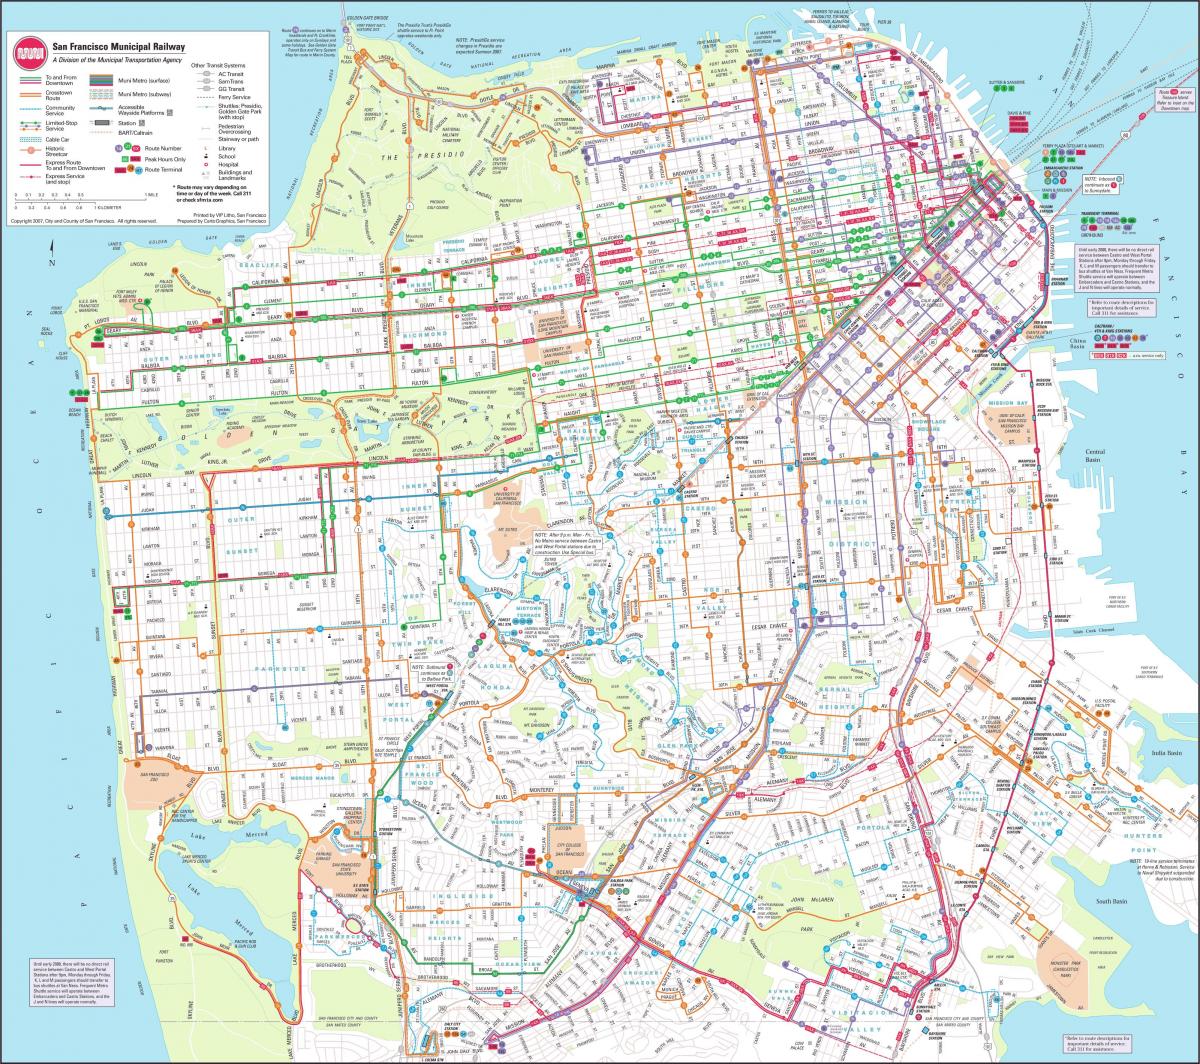 Mapa San Francisco miejska kolej